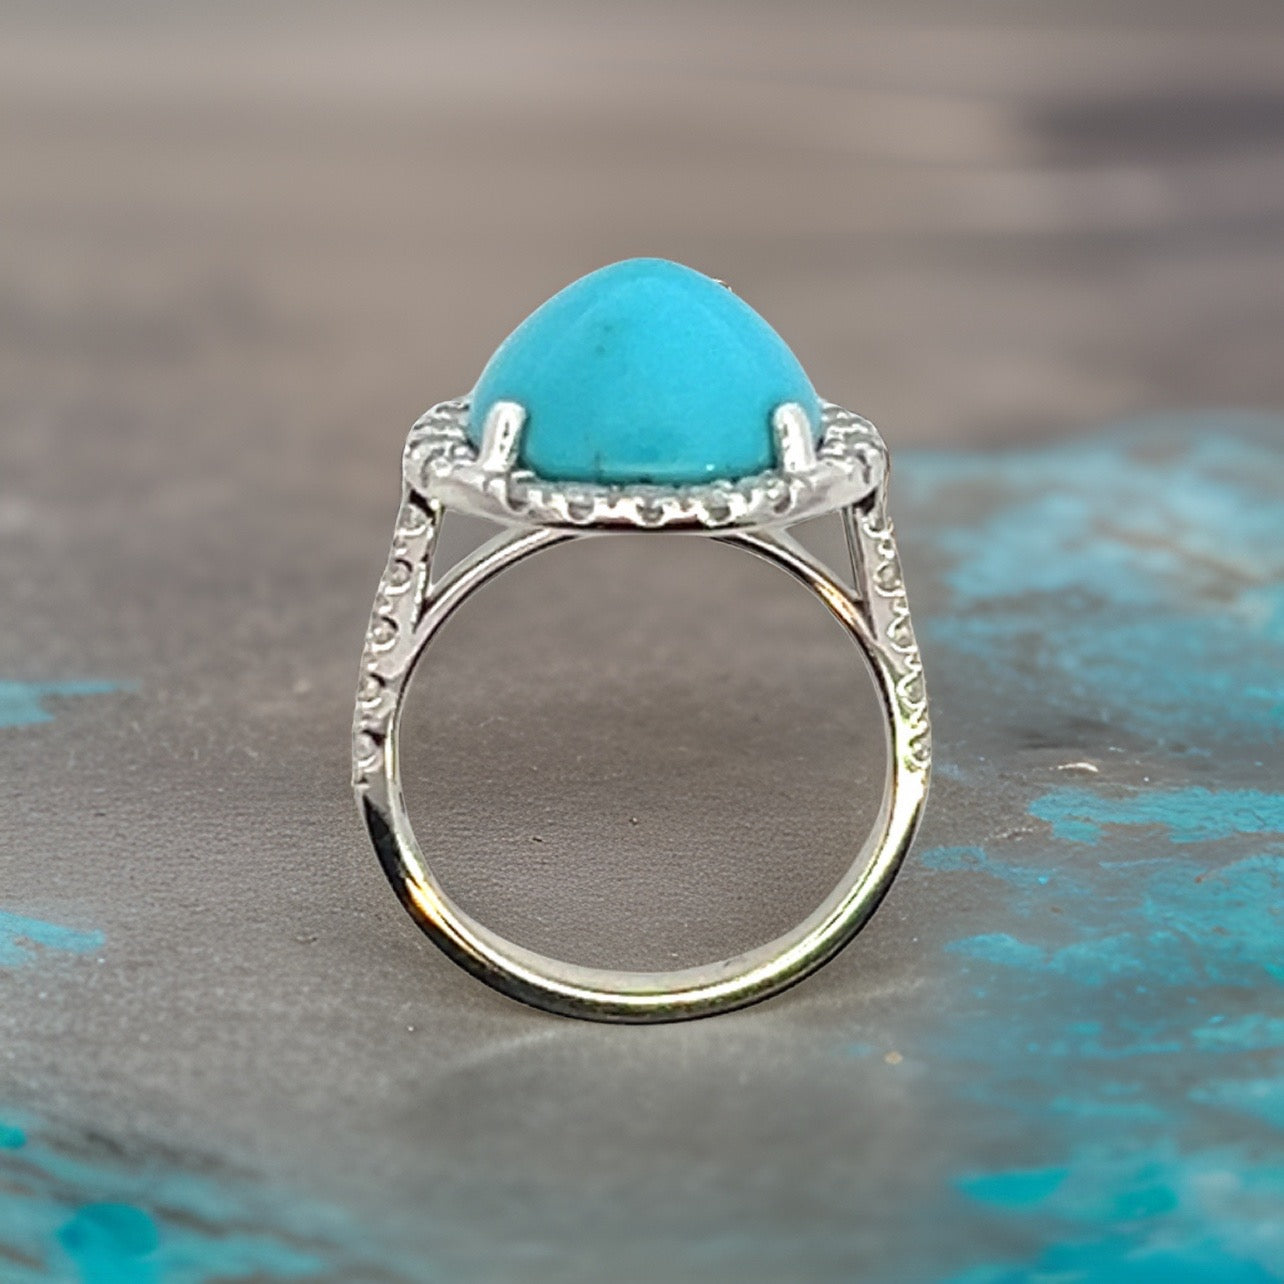 Natural Persian Turquoise Diamond Ring 6.5 14k WG 8.33 TCW Certified $5,950 310657